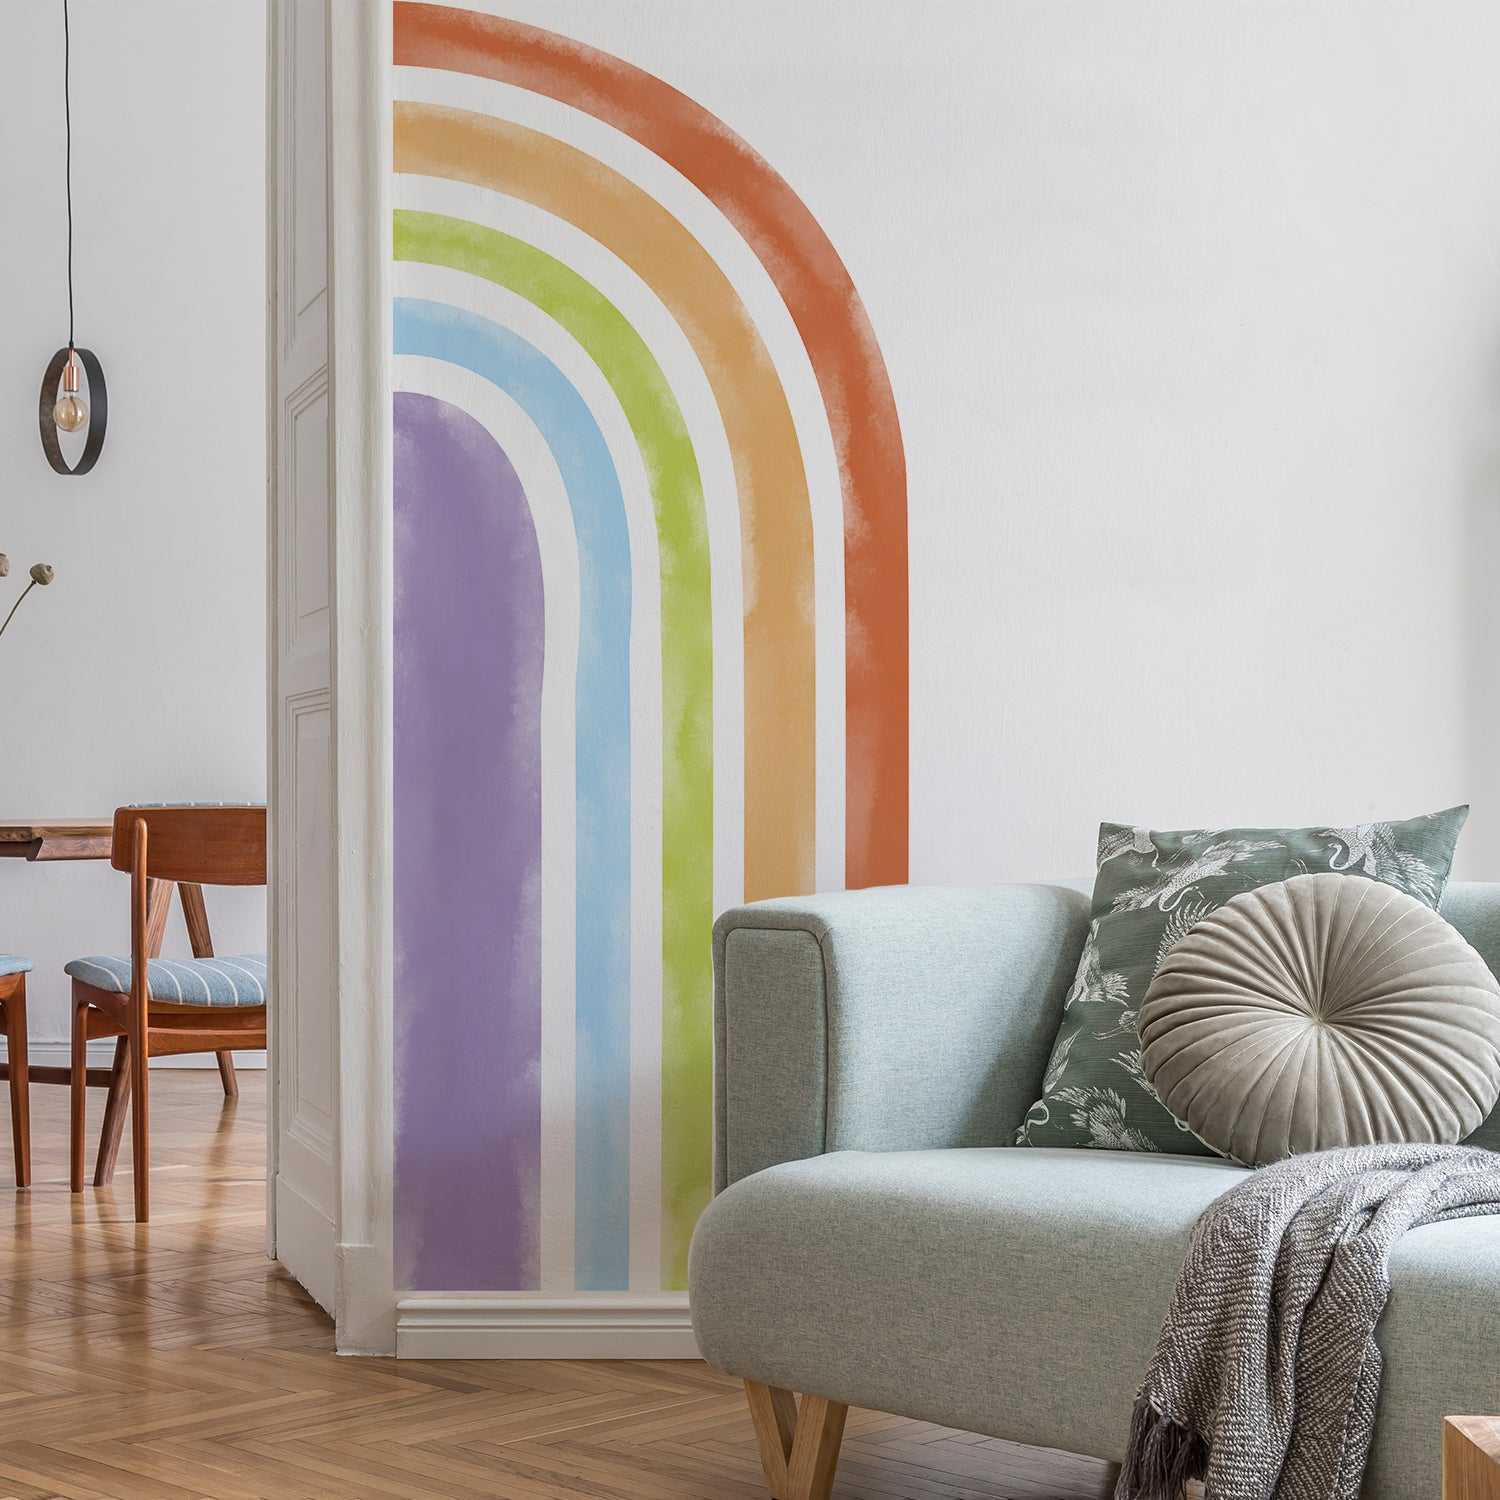 Corner Rainbow Wall Decal for Kids Room | Kids Room Wall Decal